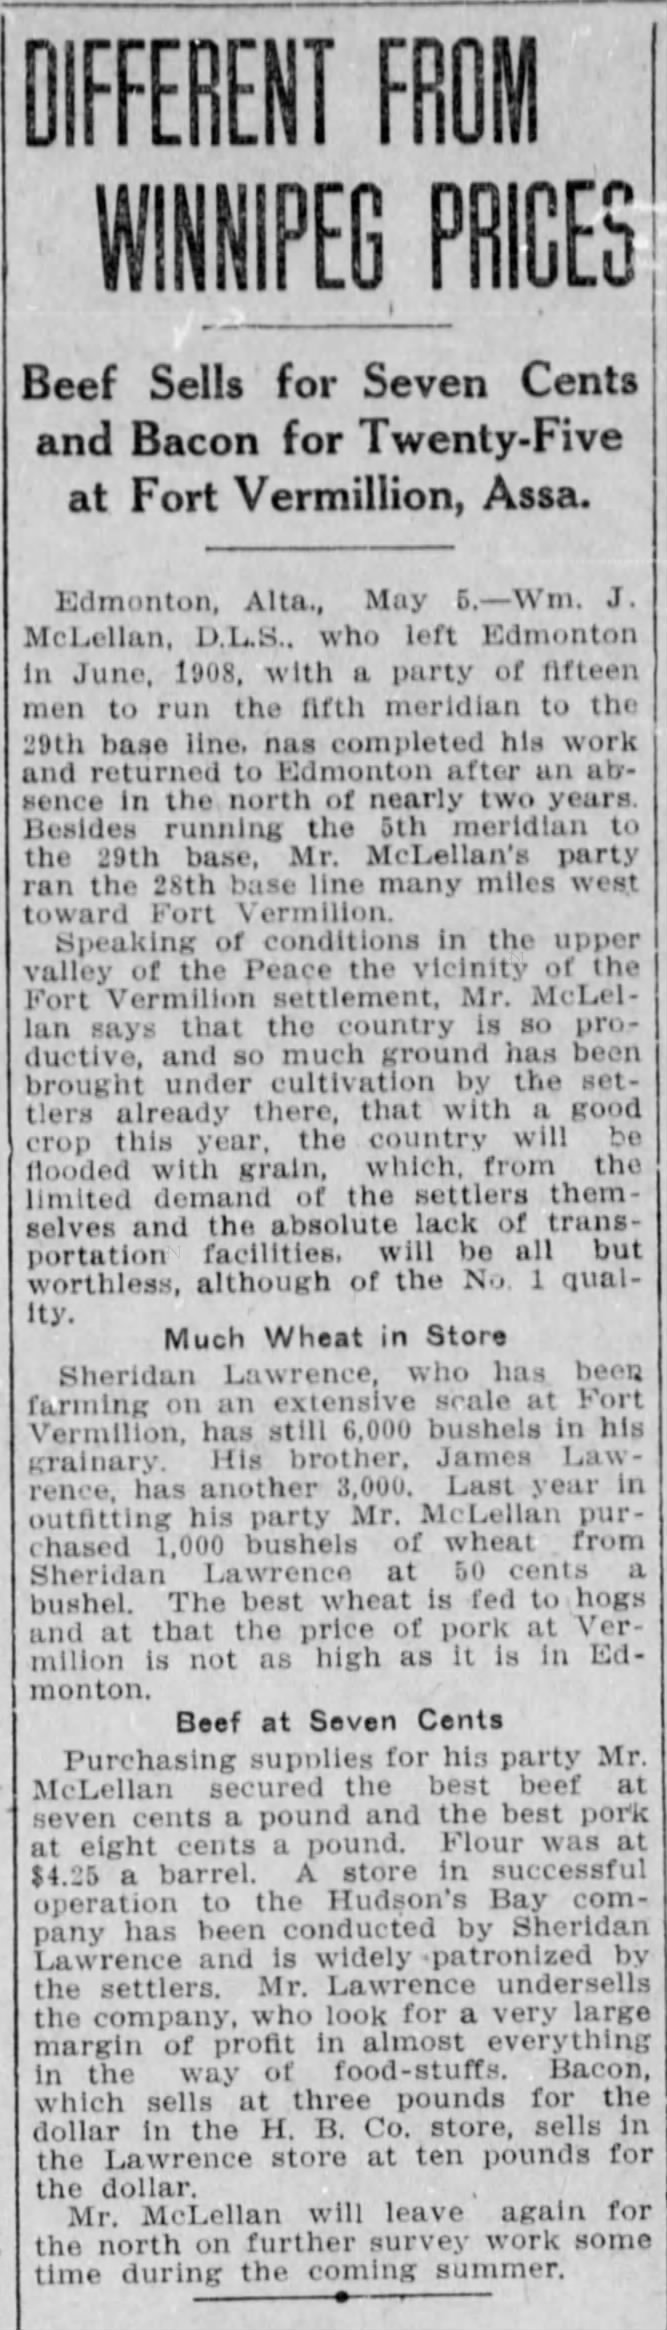 Winnipeg Tribune 1910.05.05 Sheridan Lawrence wheat